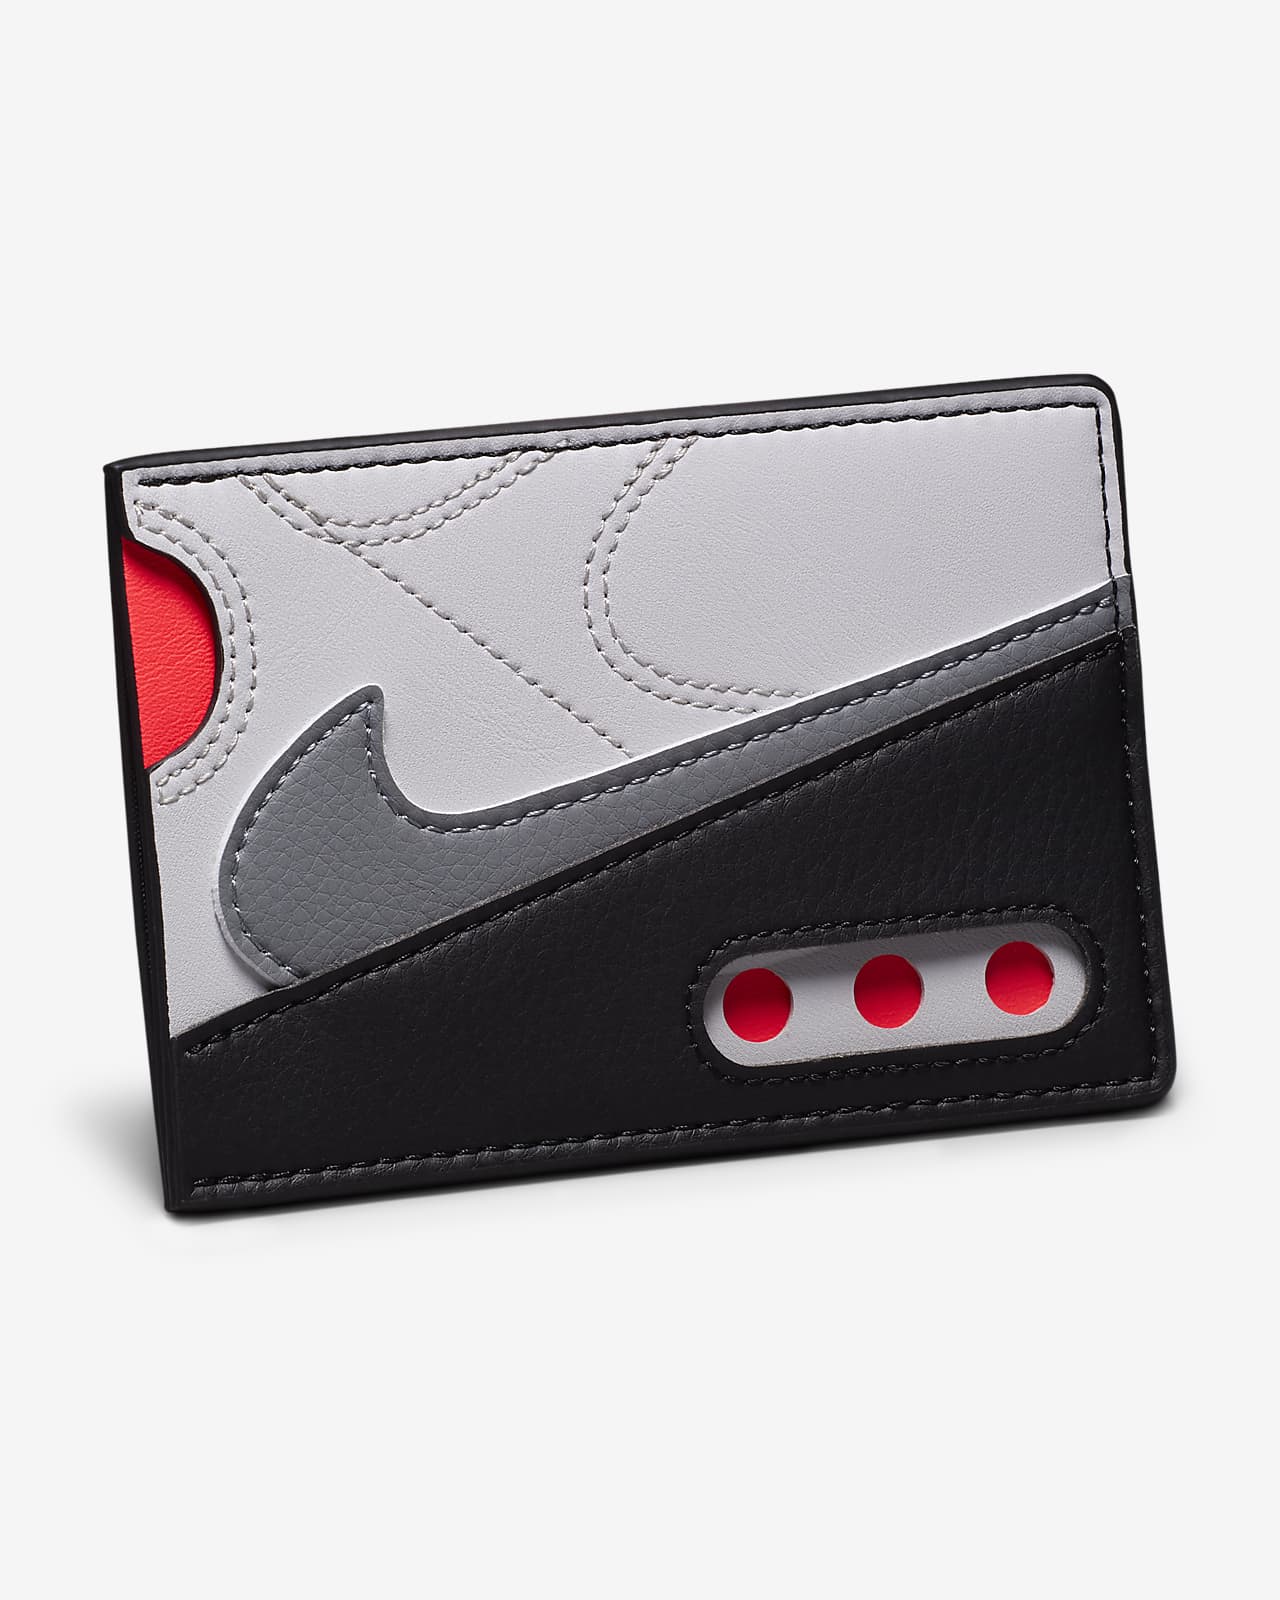 Nike Icon Air Max 90 Card Wallet